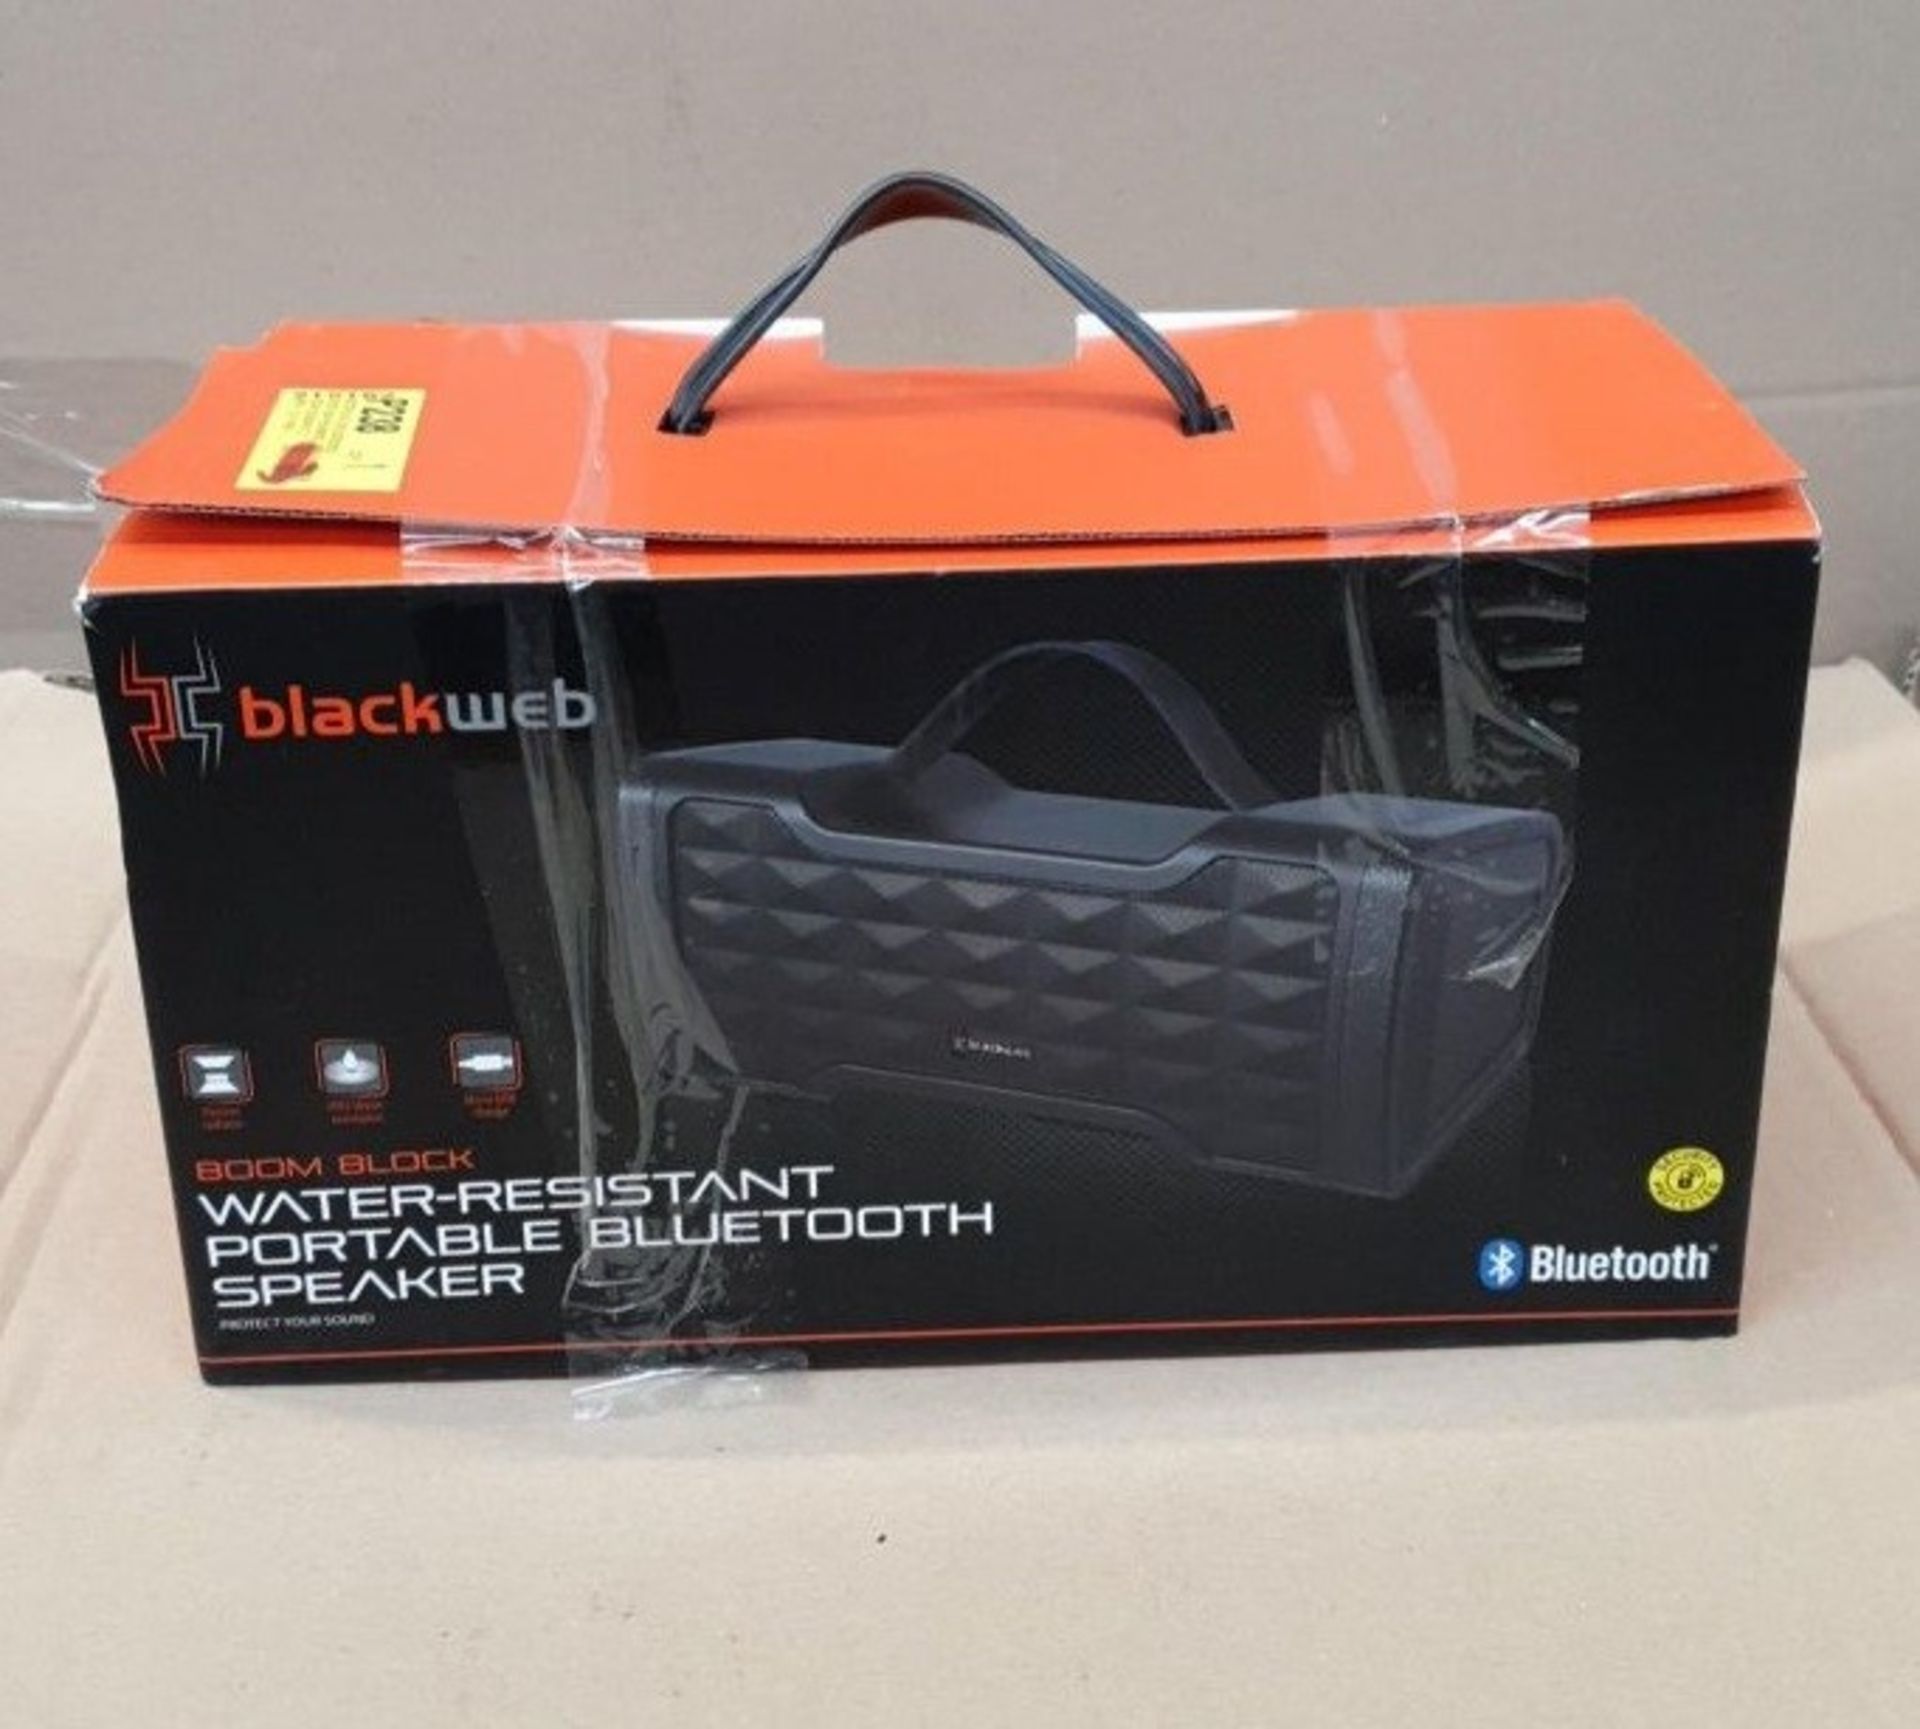 1 BOXED BLACKWEB BOOM BLOCK WATER RESISTANT PORTABLE BLUETOOTH SPEAKER IN BLACK / BL -5162 / RRP £